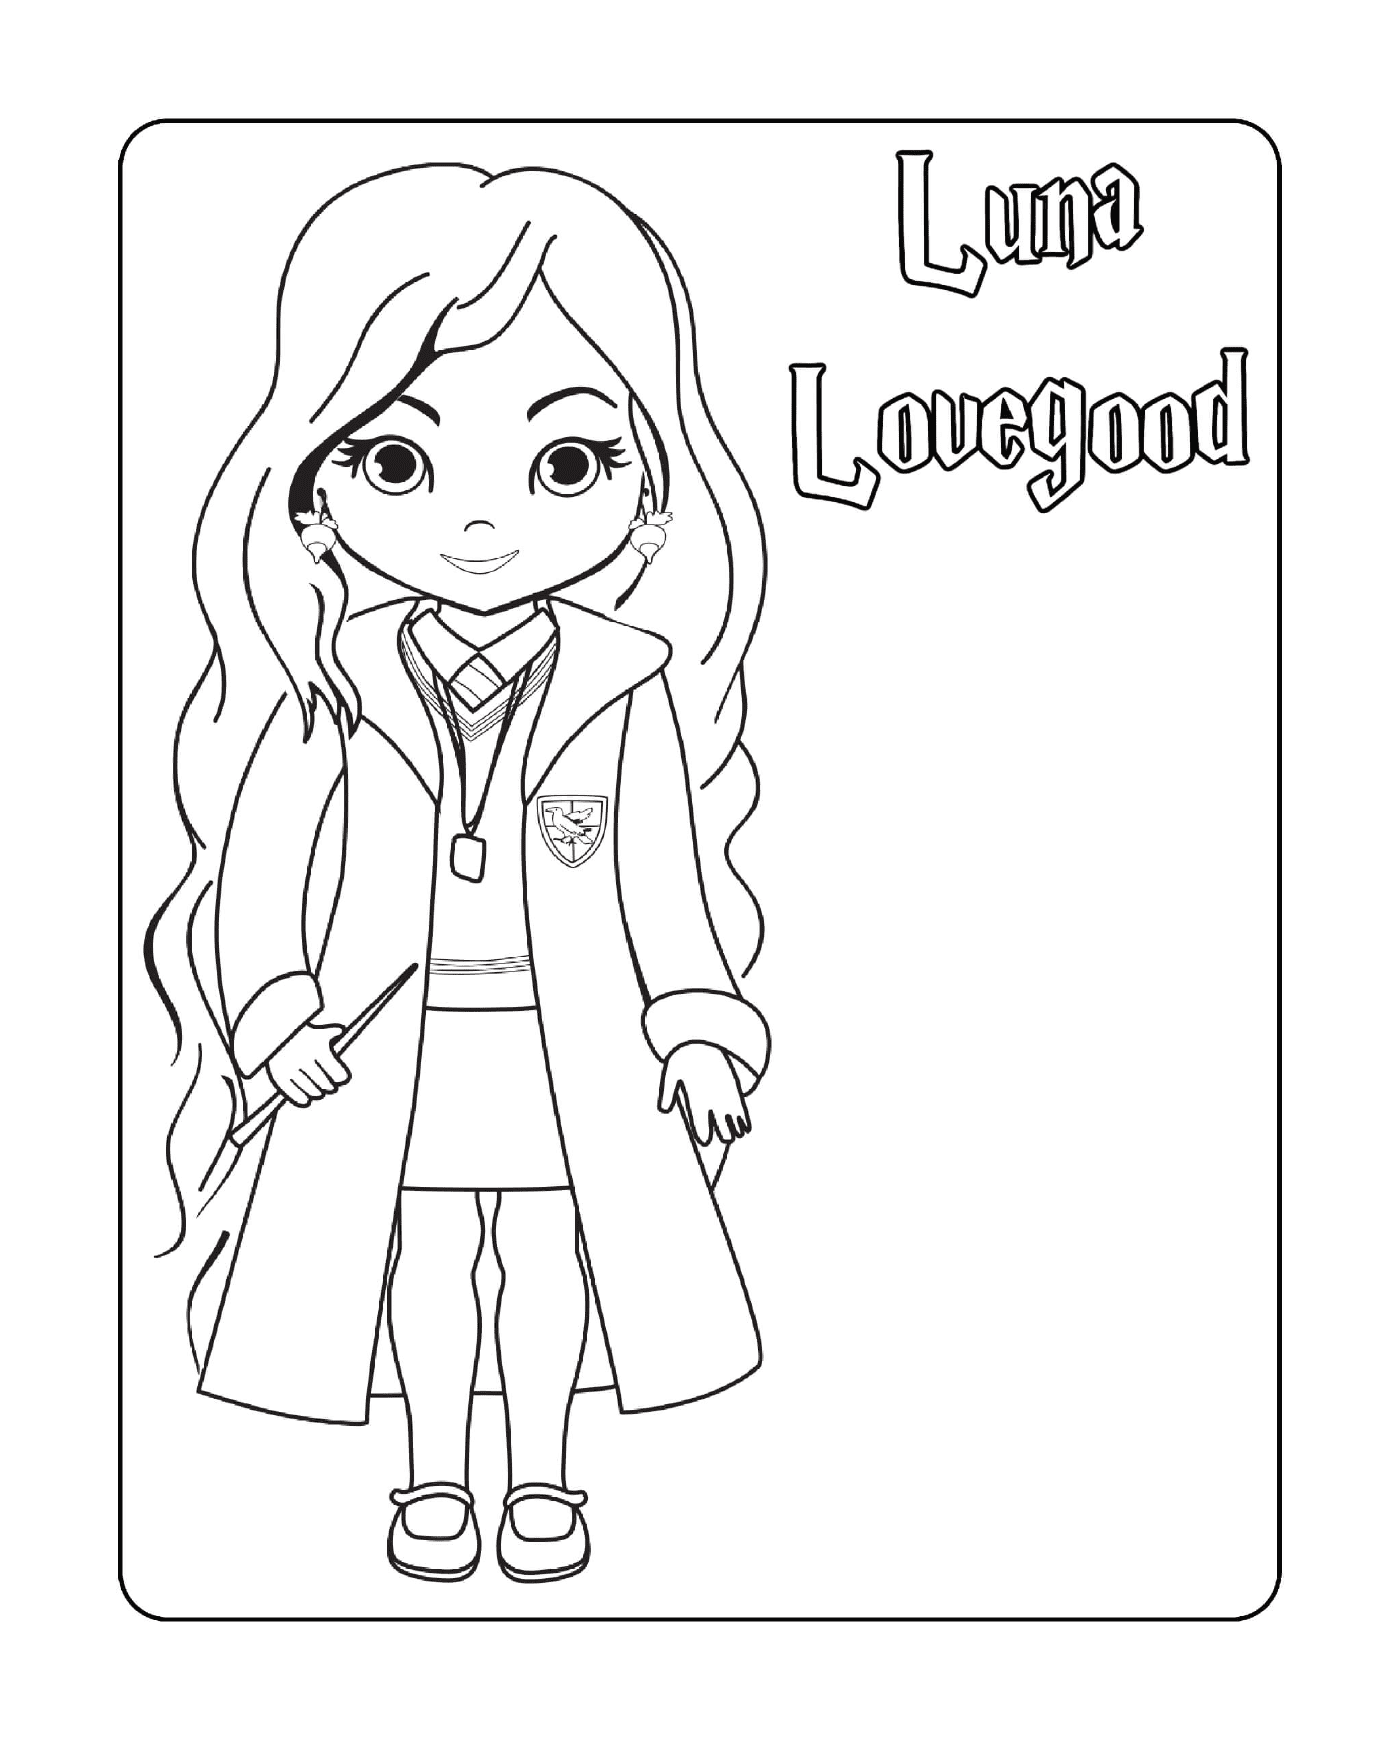   Luna Lovegood, baguette en main 